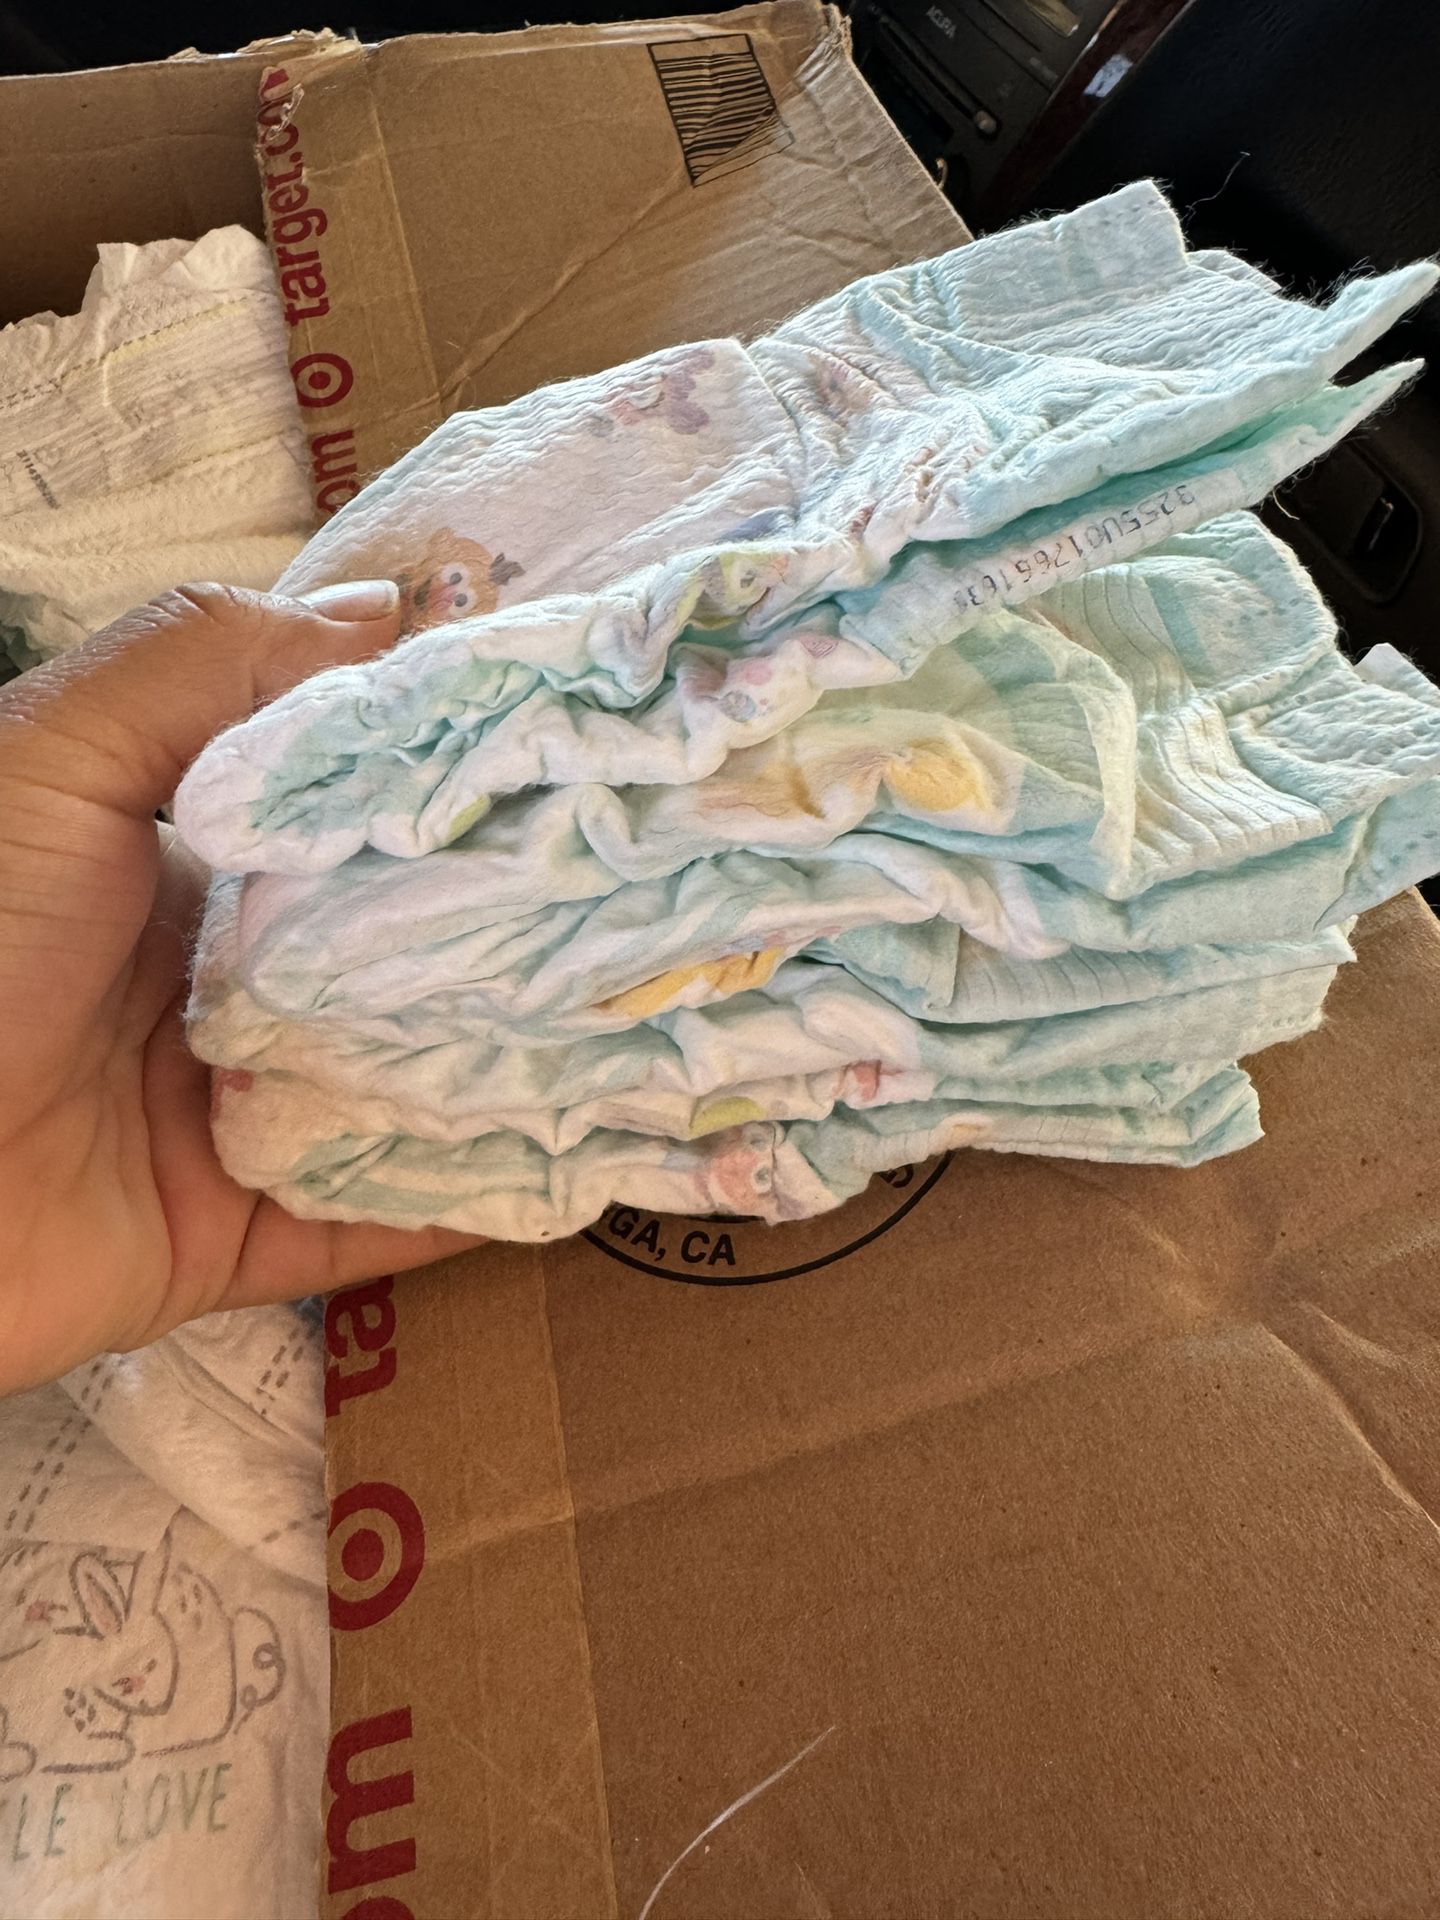 Selling NB Diapers